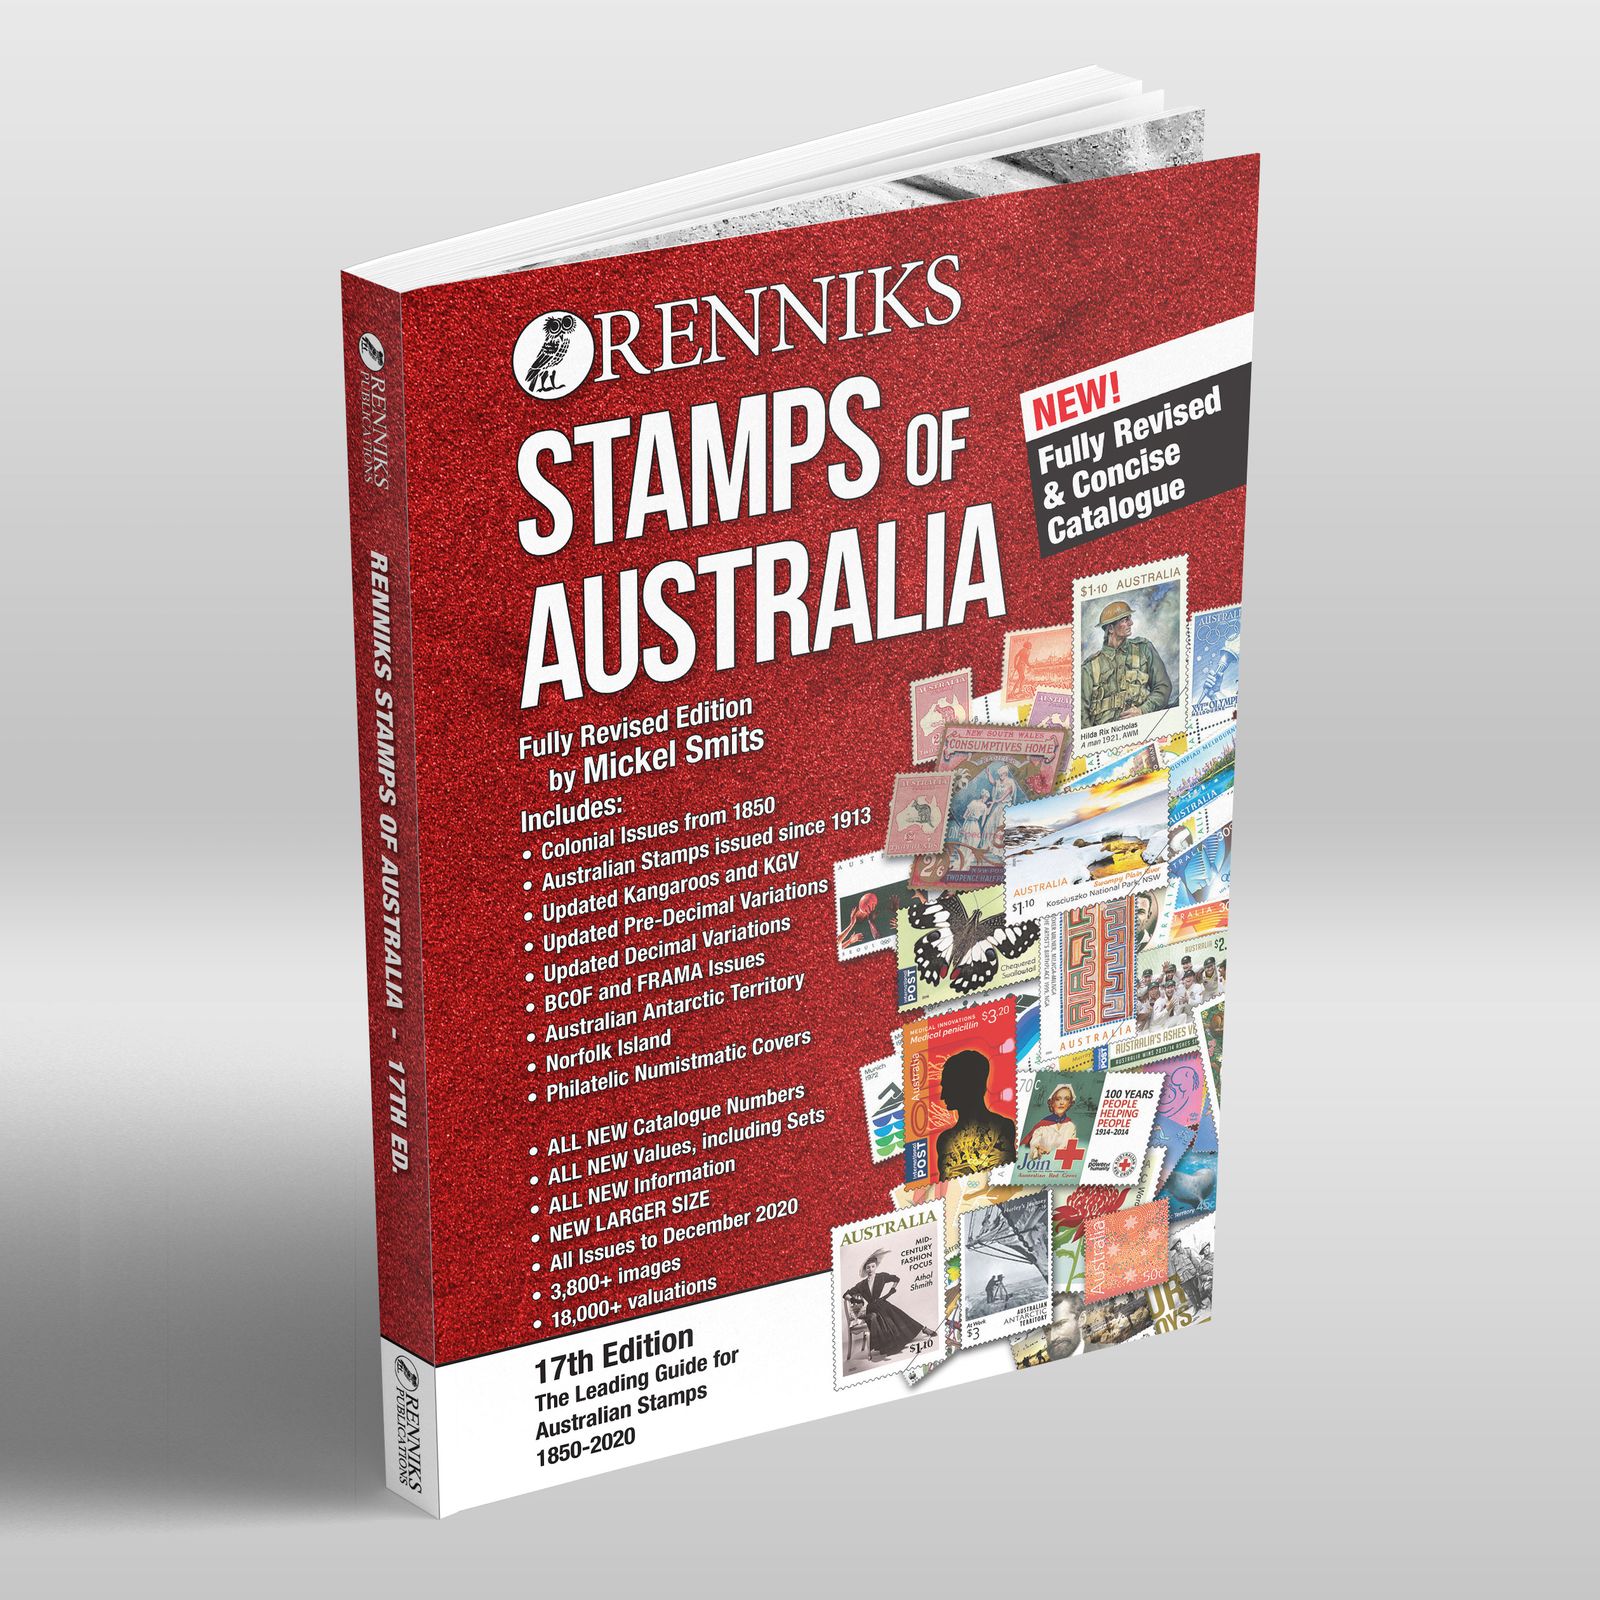 Australia Catalogue